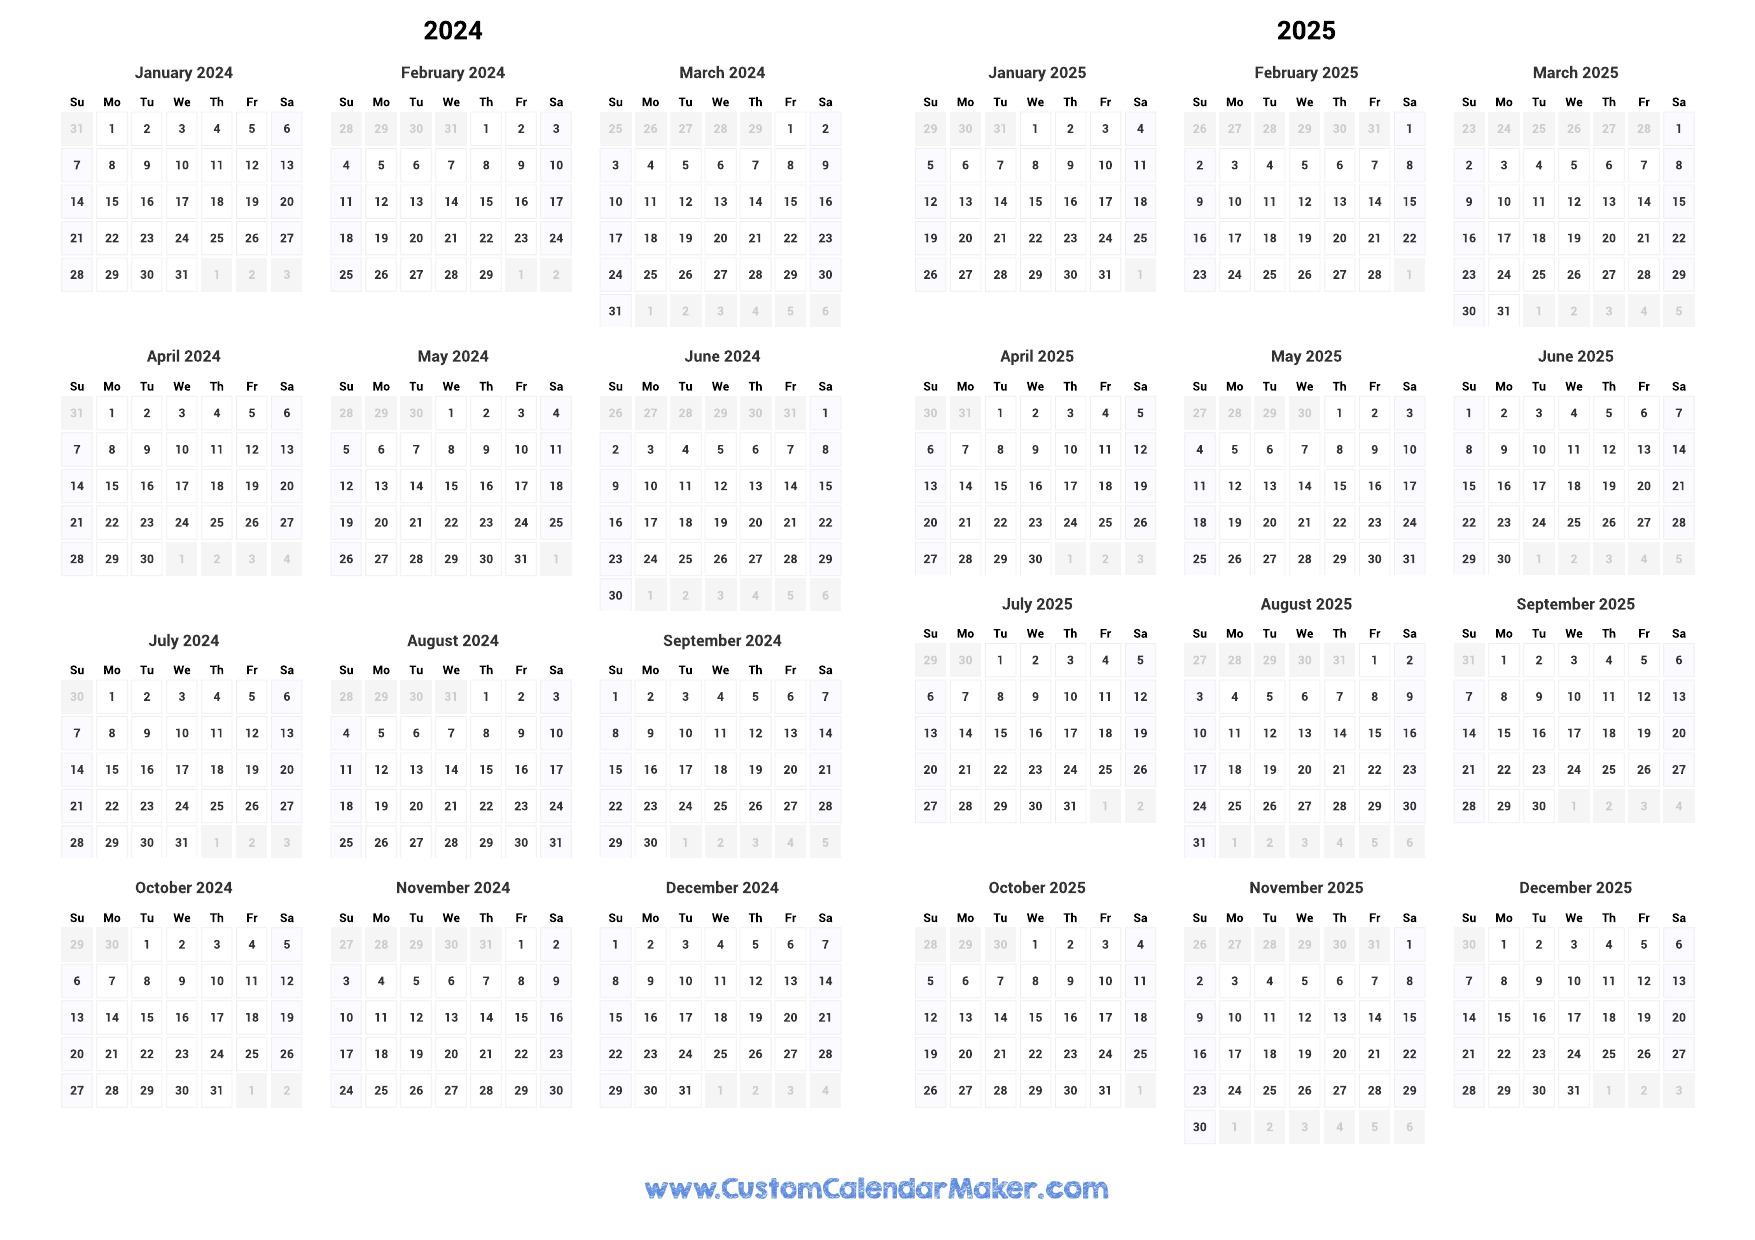 2025-canada-calendar-with-holidays